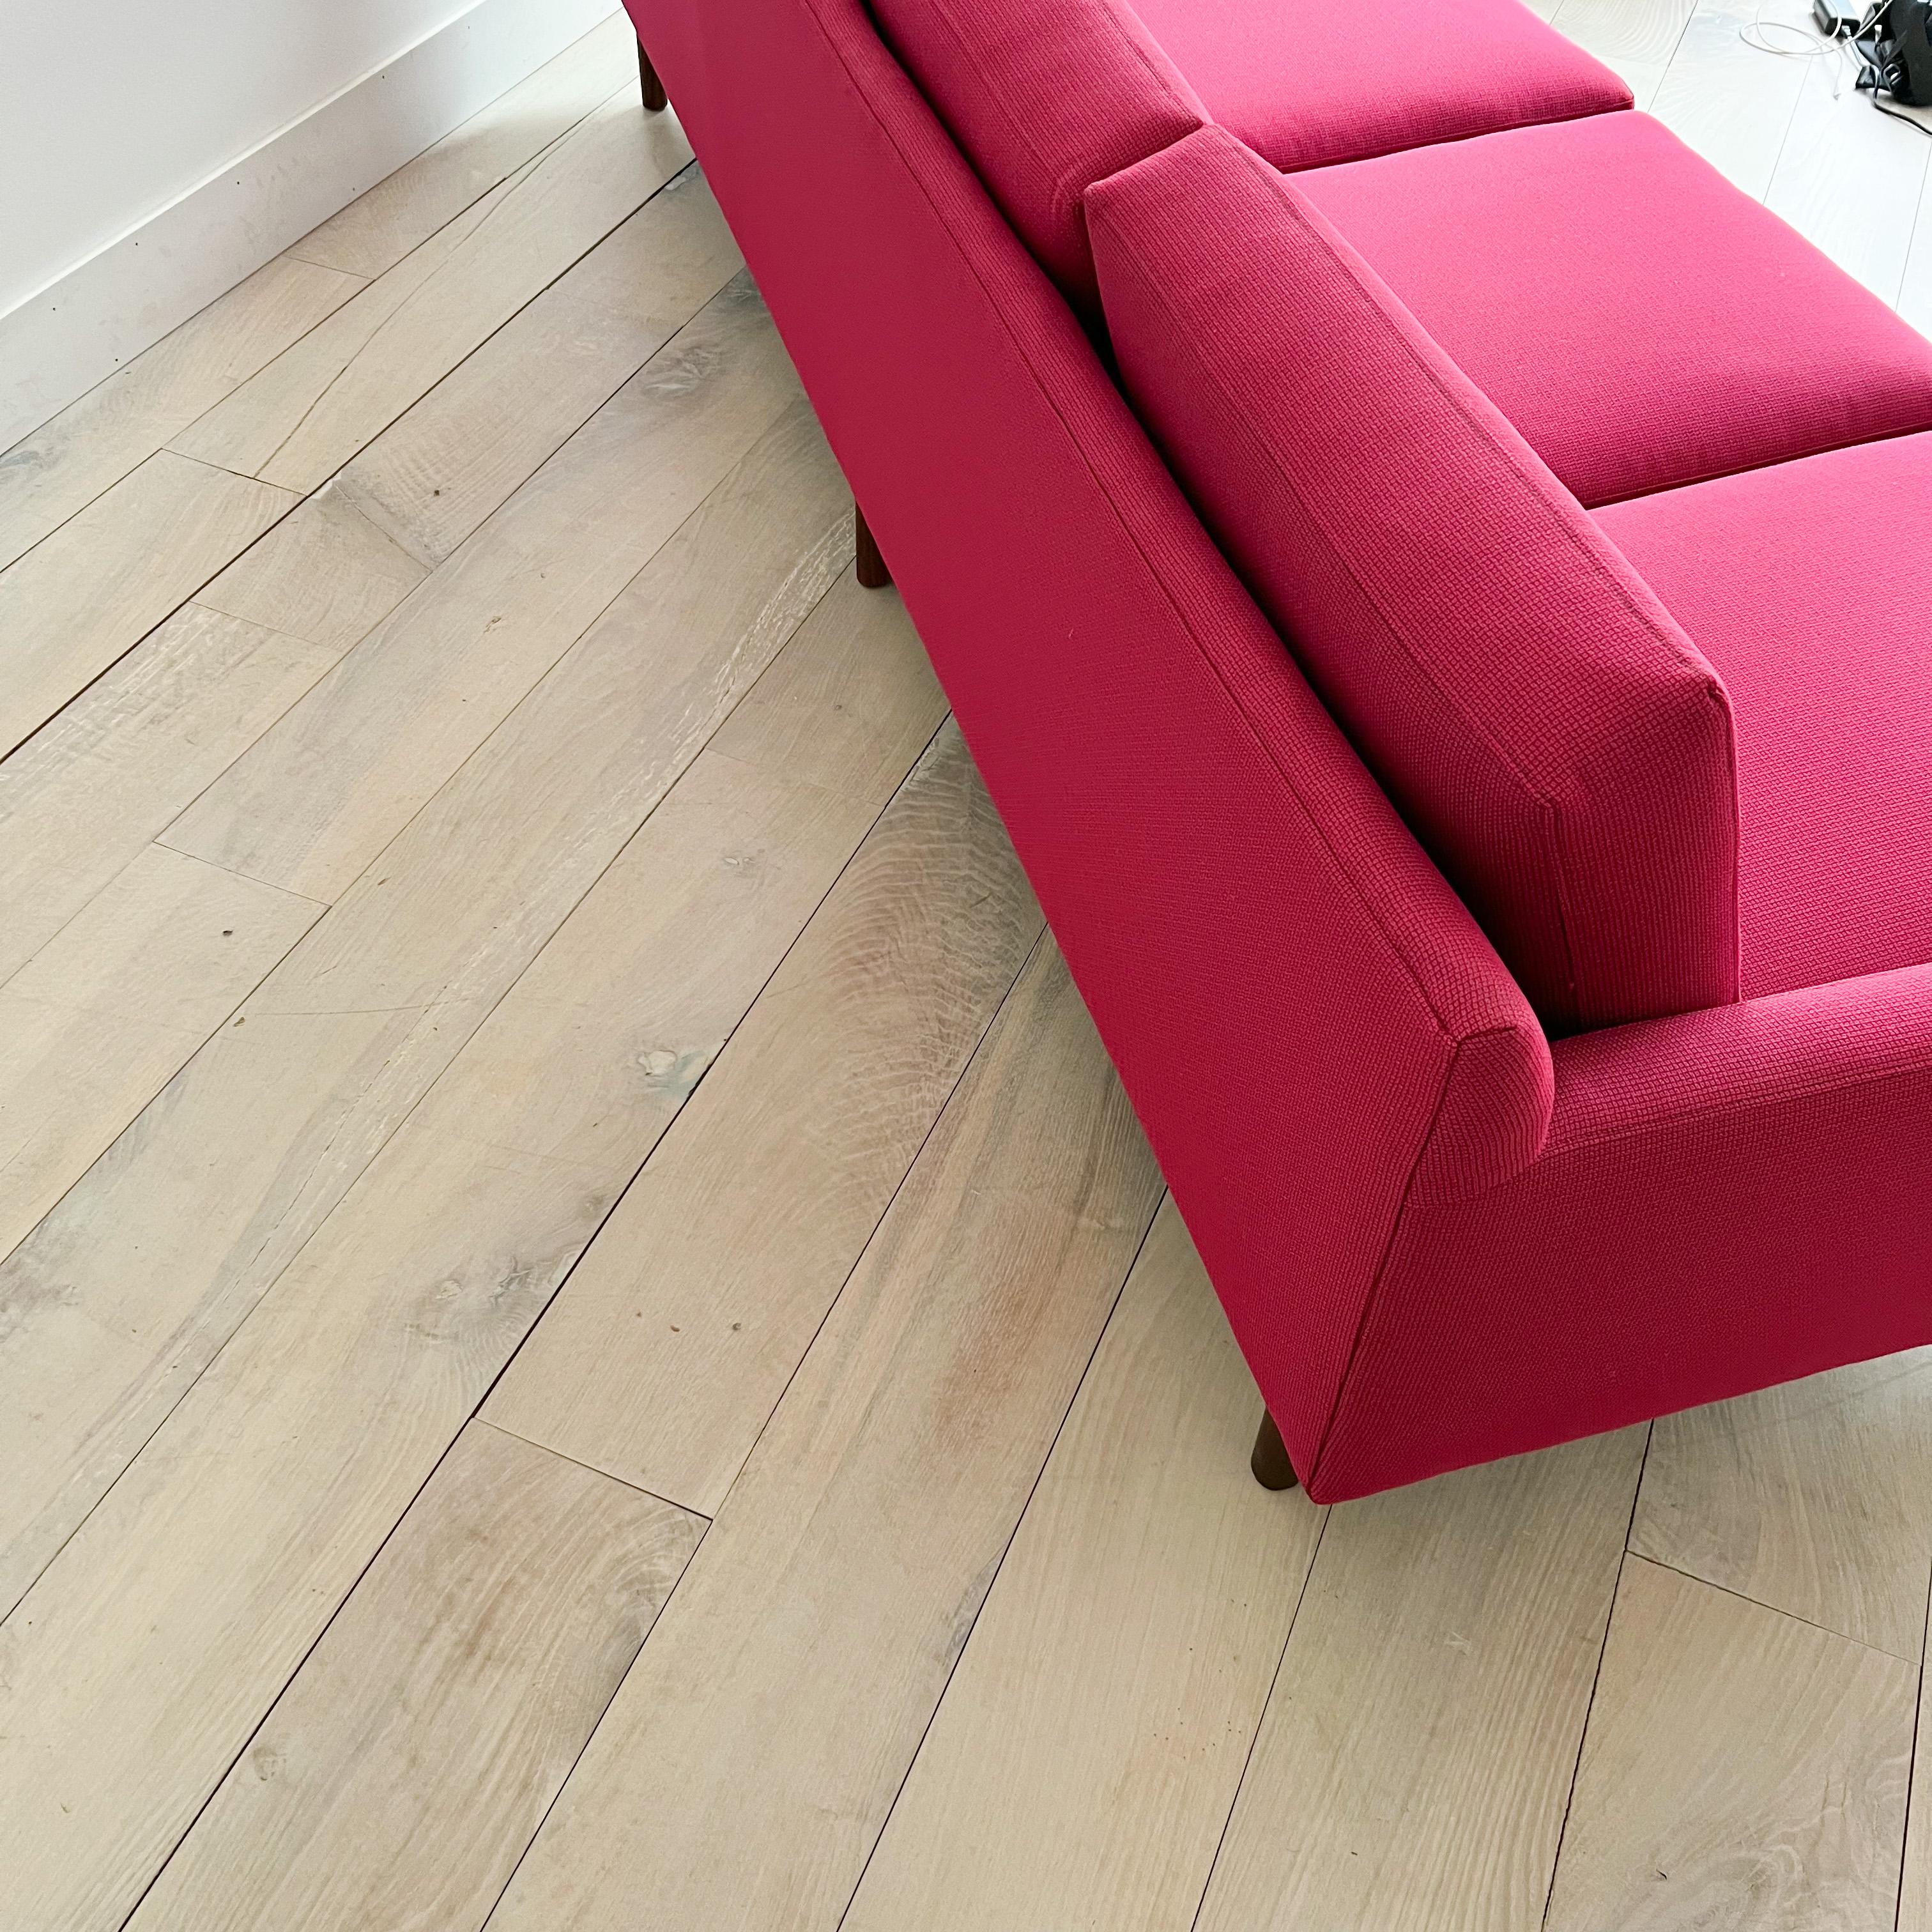 Mid-Century Modern Long Low Sofa by Rowe, New Fuchsia Upholstery 1